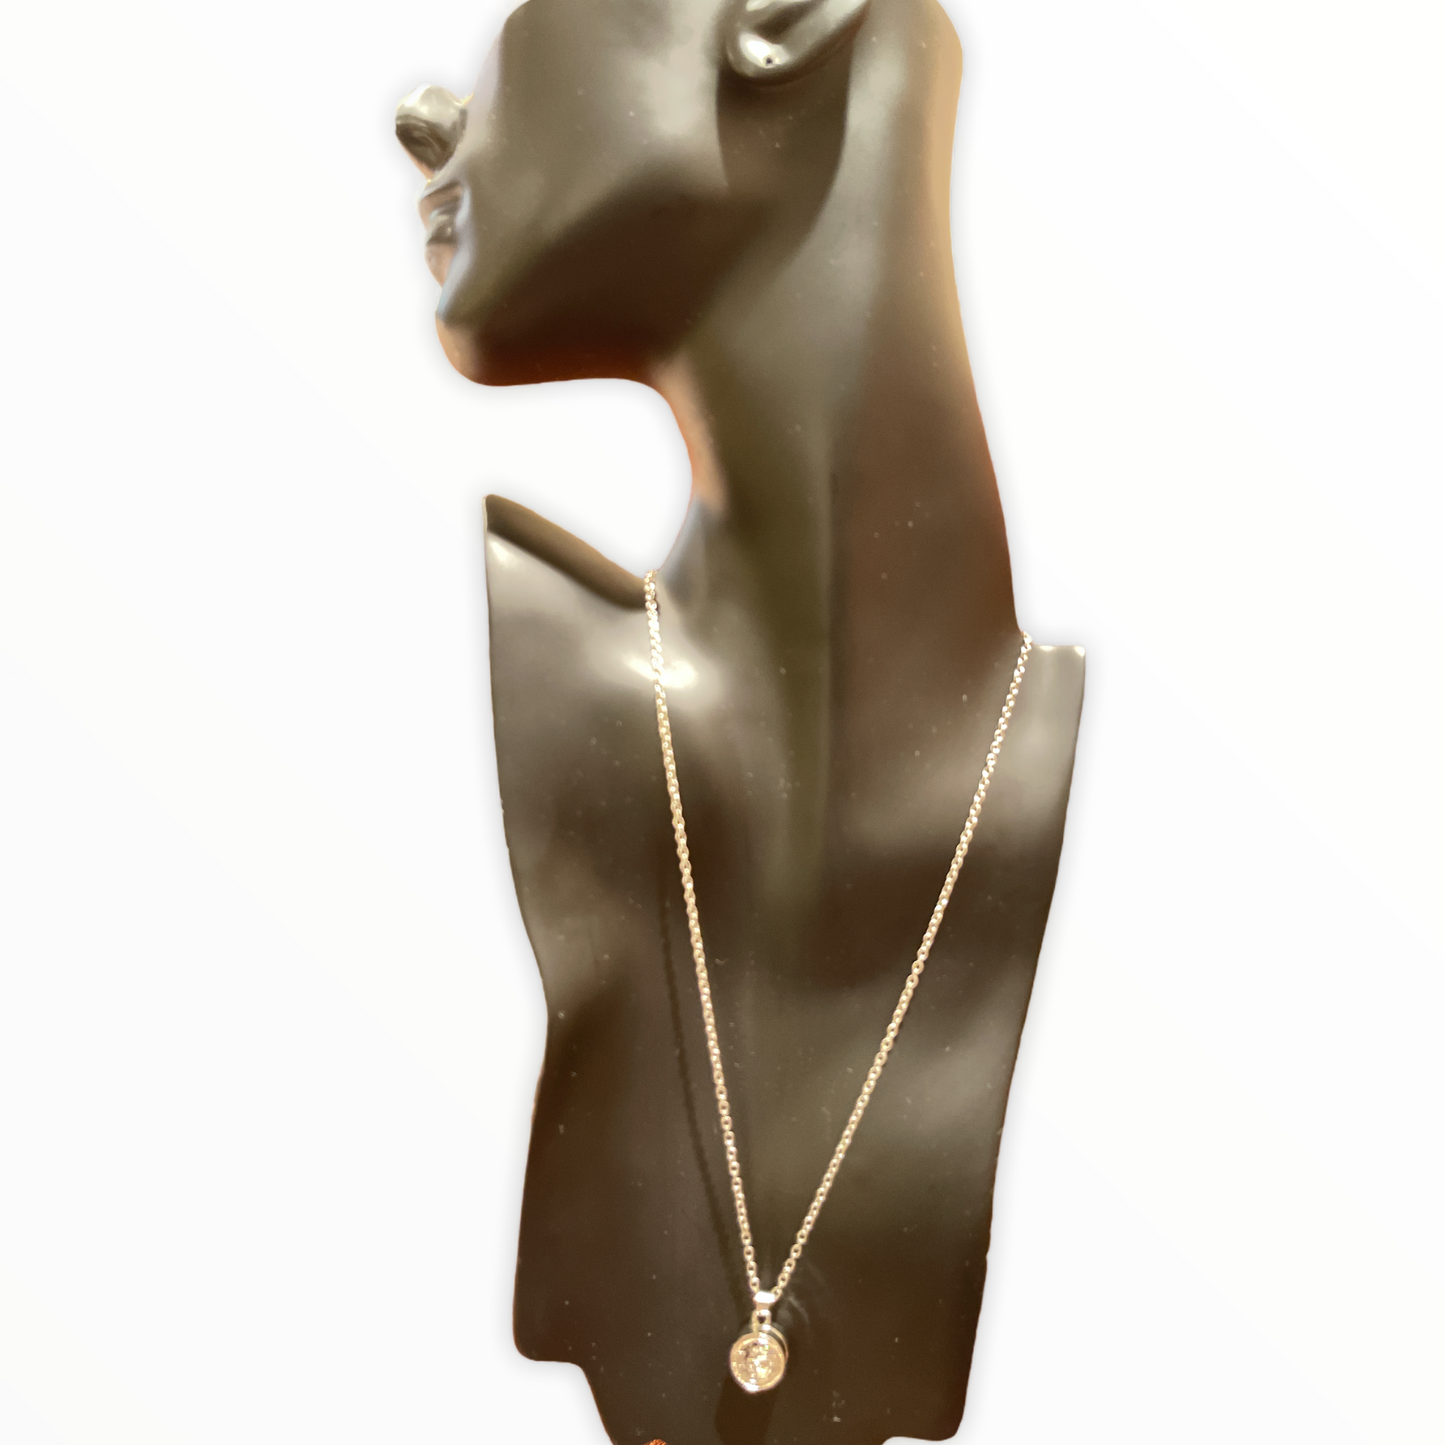 Love Locket Necklace Made with Swarovski Elements - Rhodium Overlay